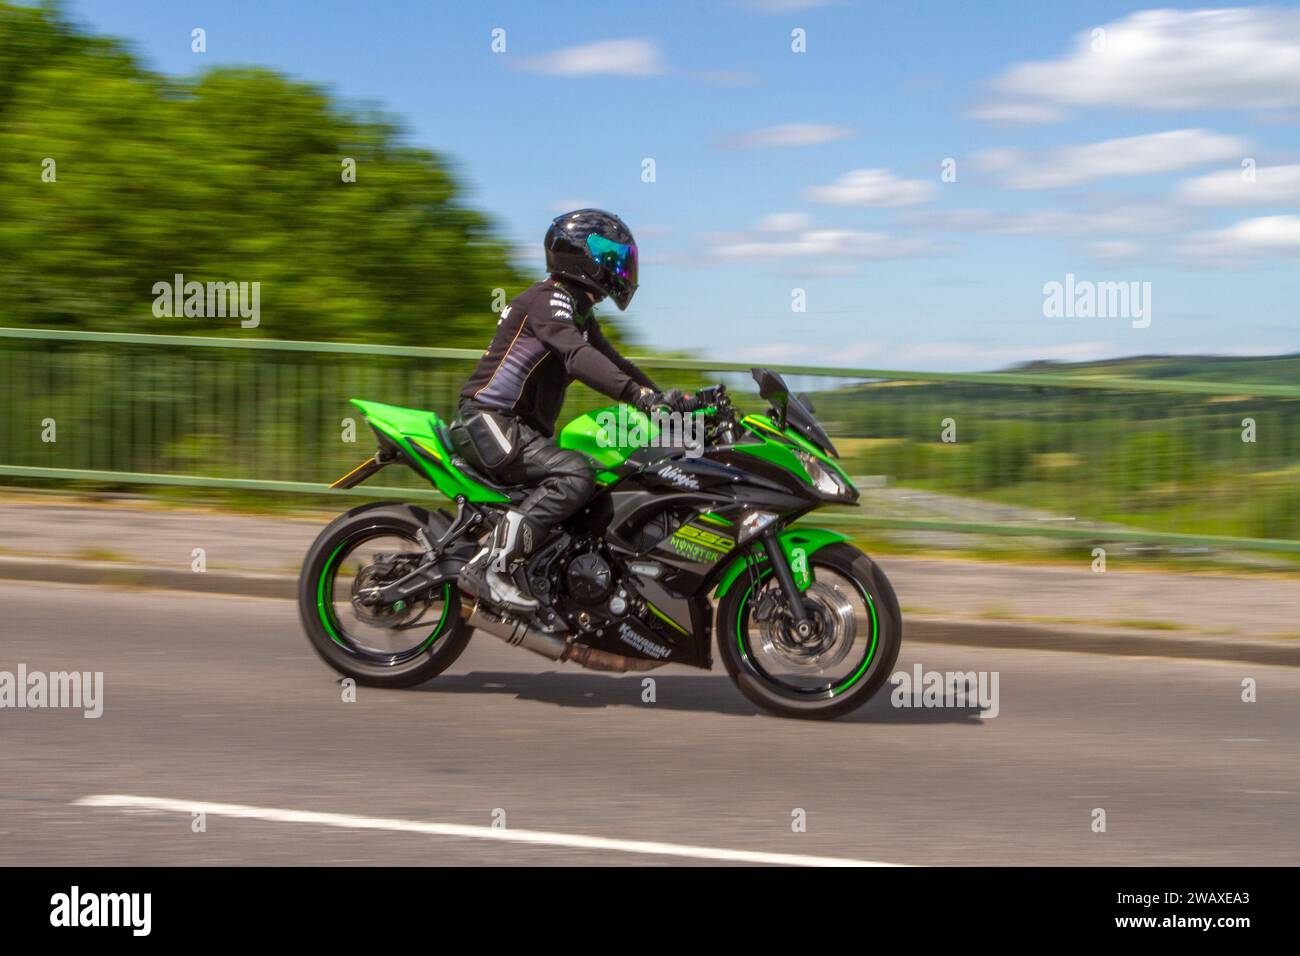 Green Kawasaki Ninja 650 Monster travelling at speed in Greater Manchester, UK Stock Photo